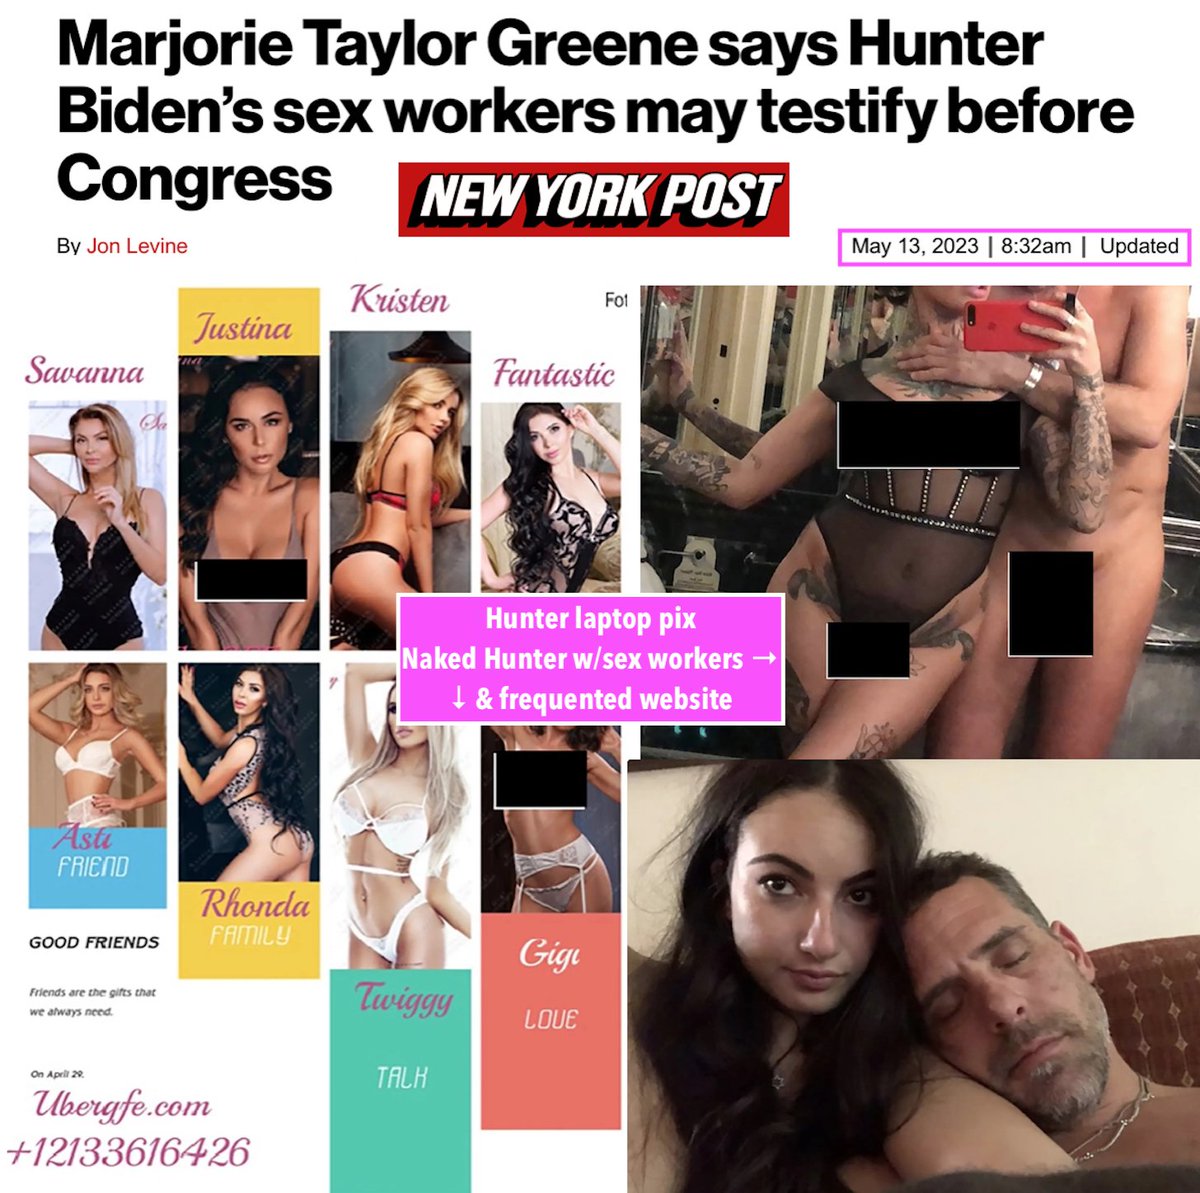 Marjorie Joe Greene says Hunter Biden's sex workers may testify before congress